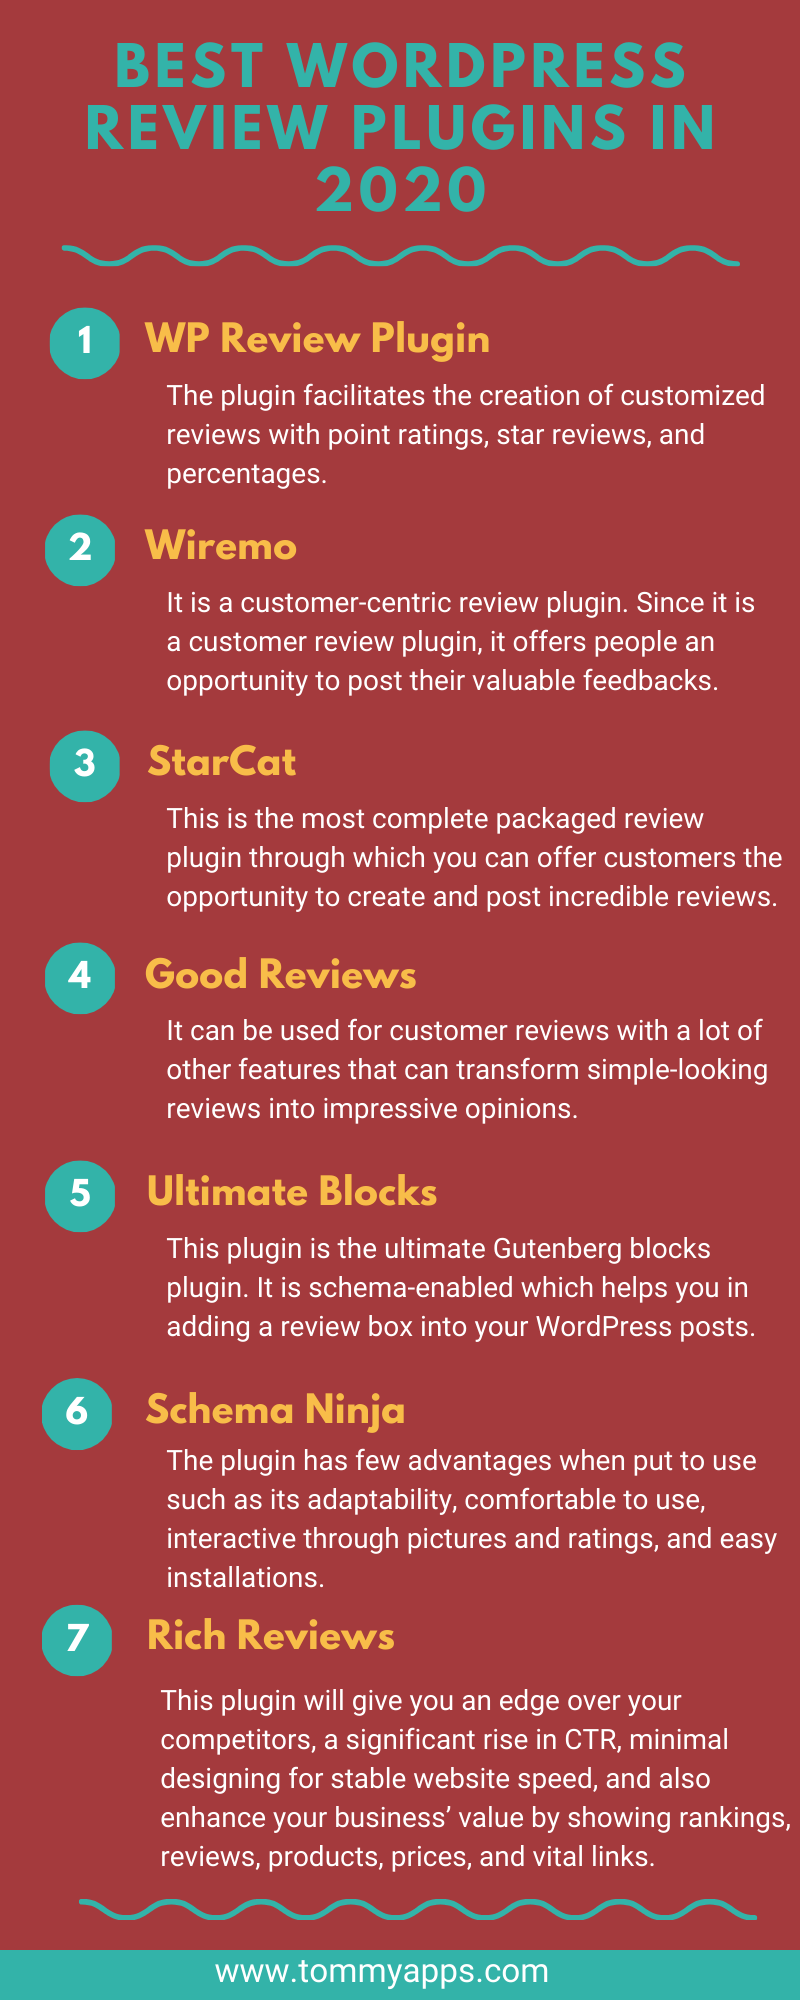 WordPress Review Plugins 